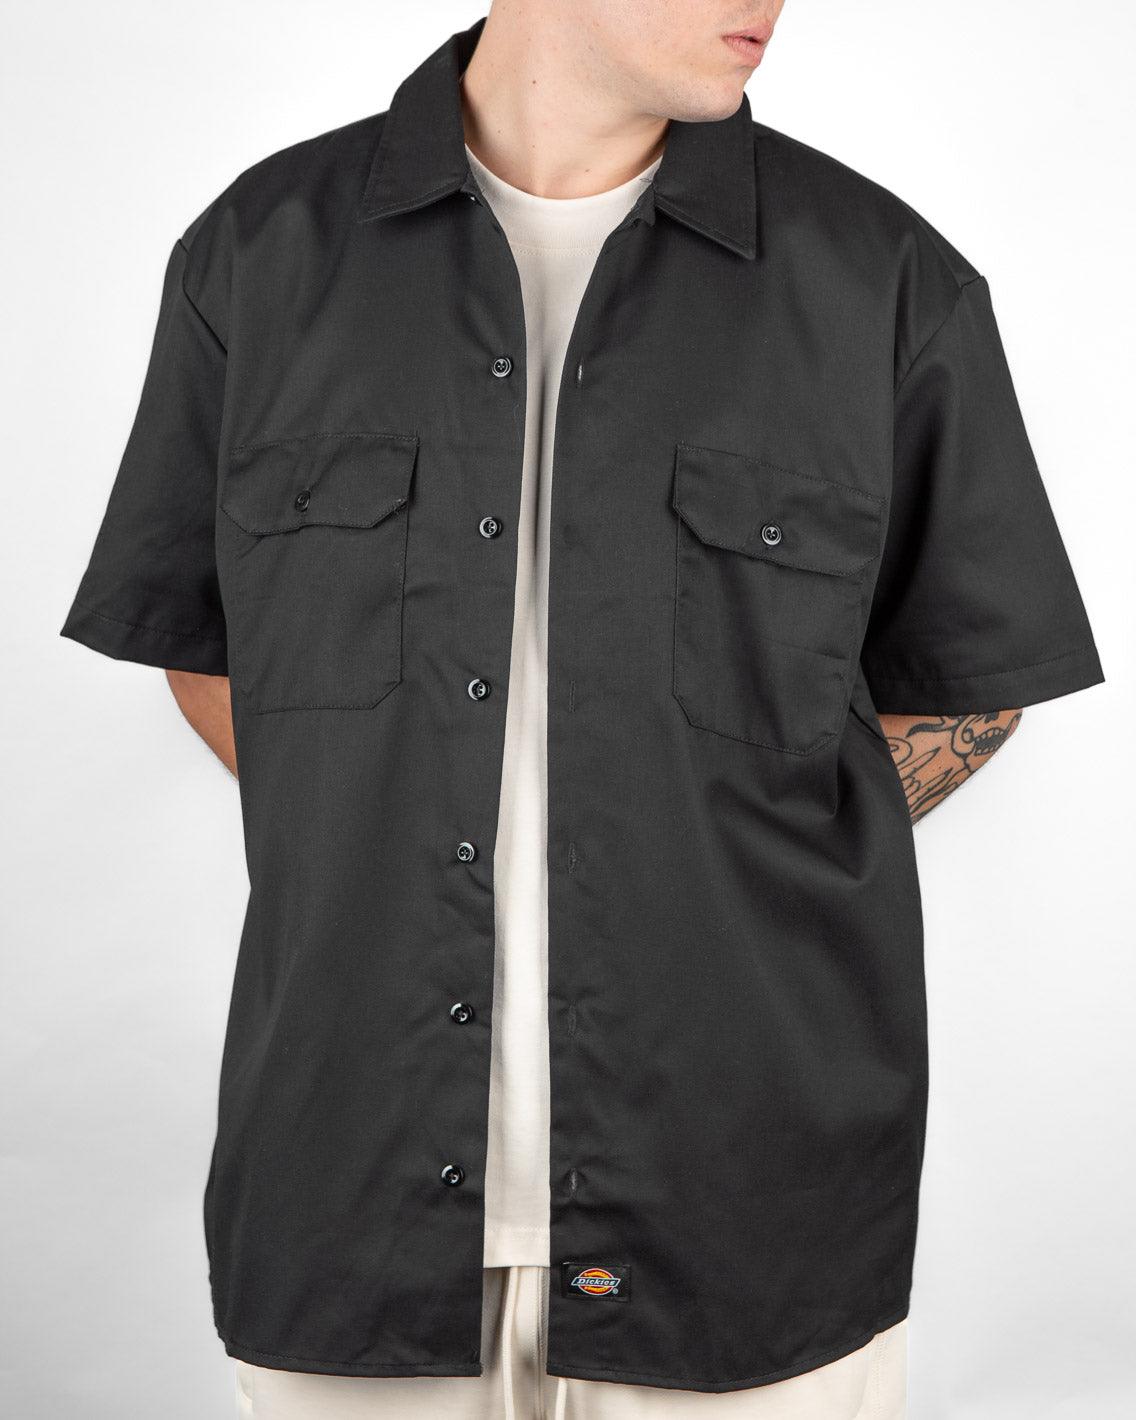 Dickies - 1574 Short Sleeve Work Shirt - Black Shirts Dickies   